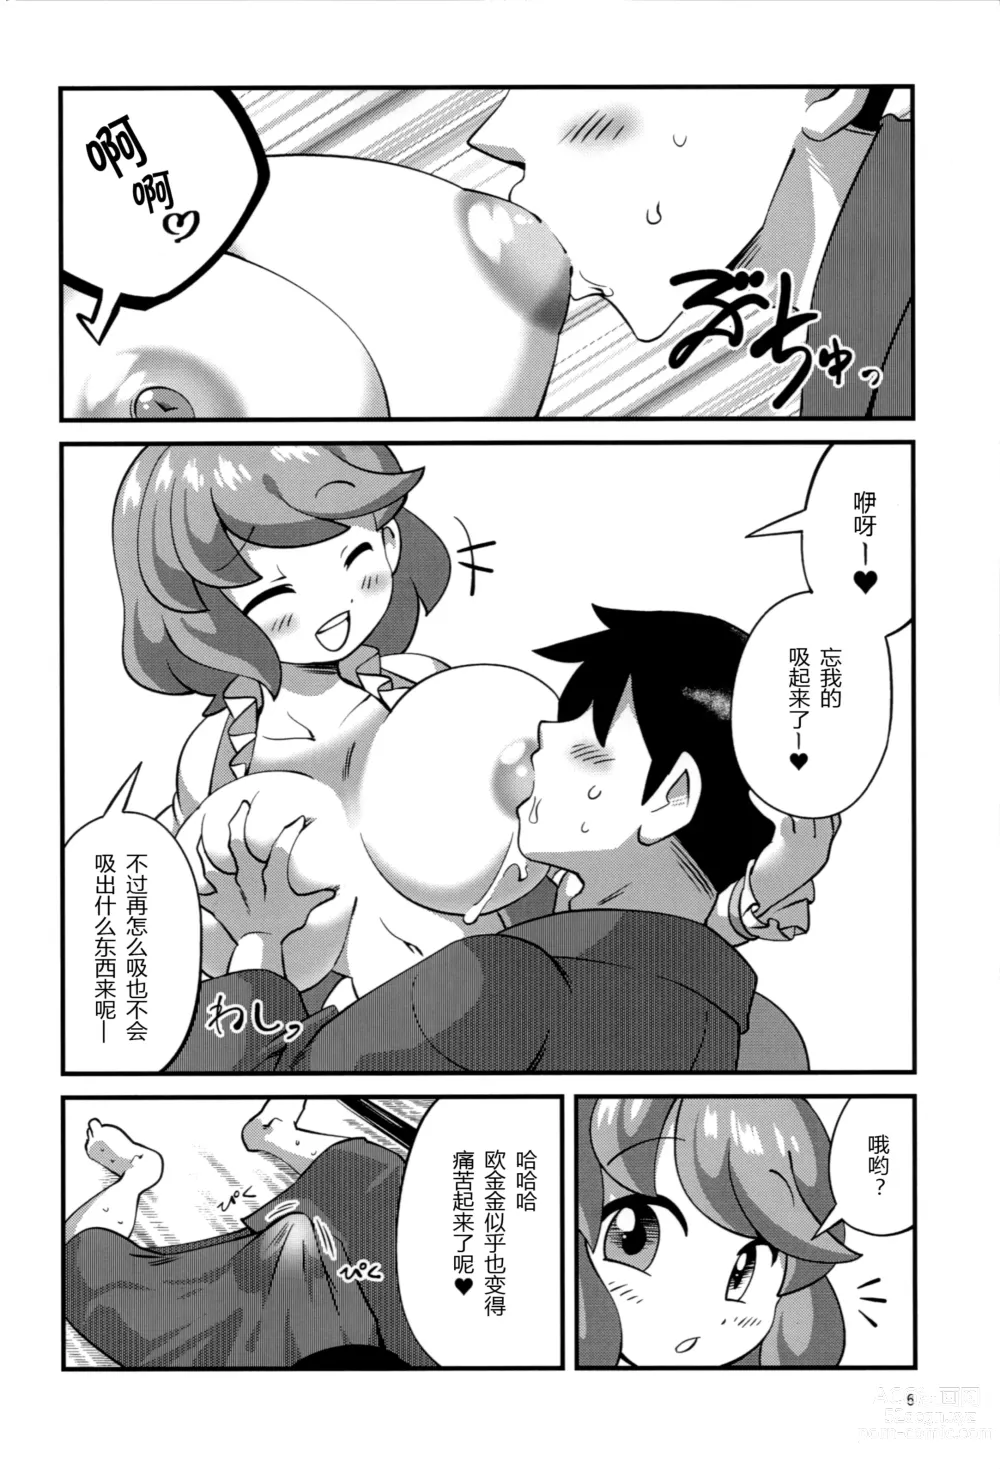 Page 7 of doujinshi Urameshi Odokashi Amayakashi